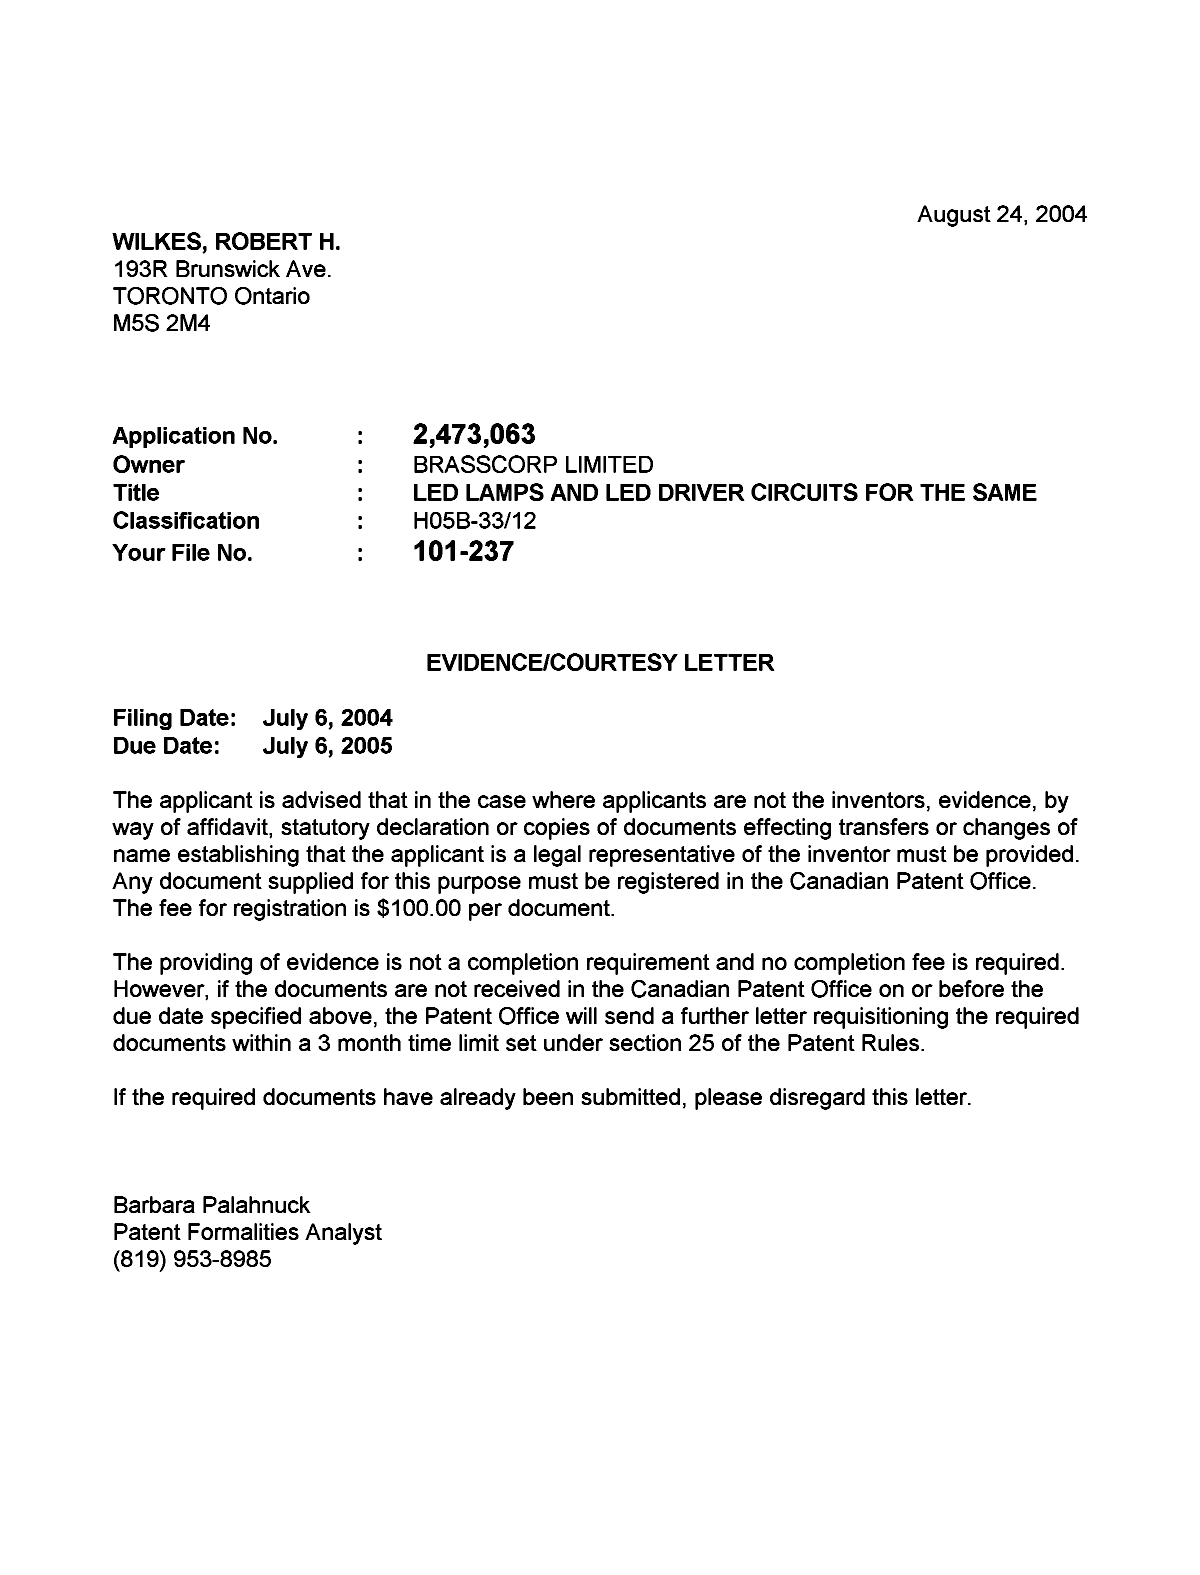 Canadian Patent Document 2473063. Correspondence 20031225. Image 1 of 1